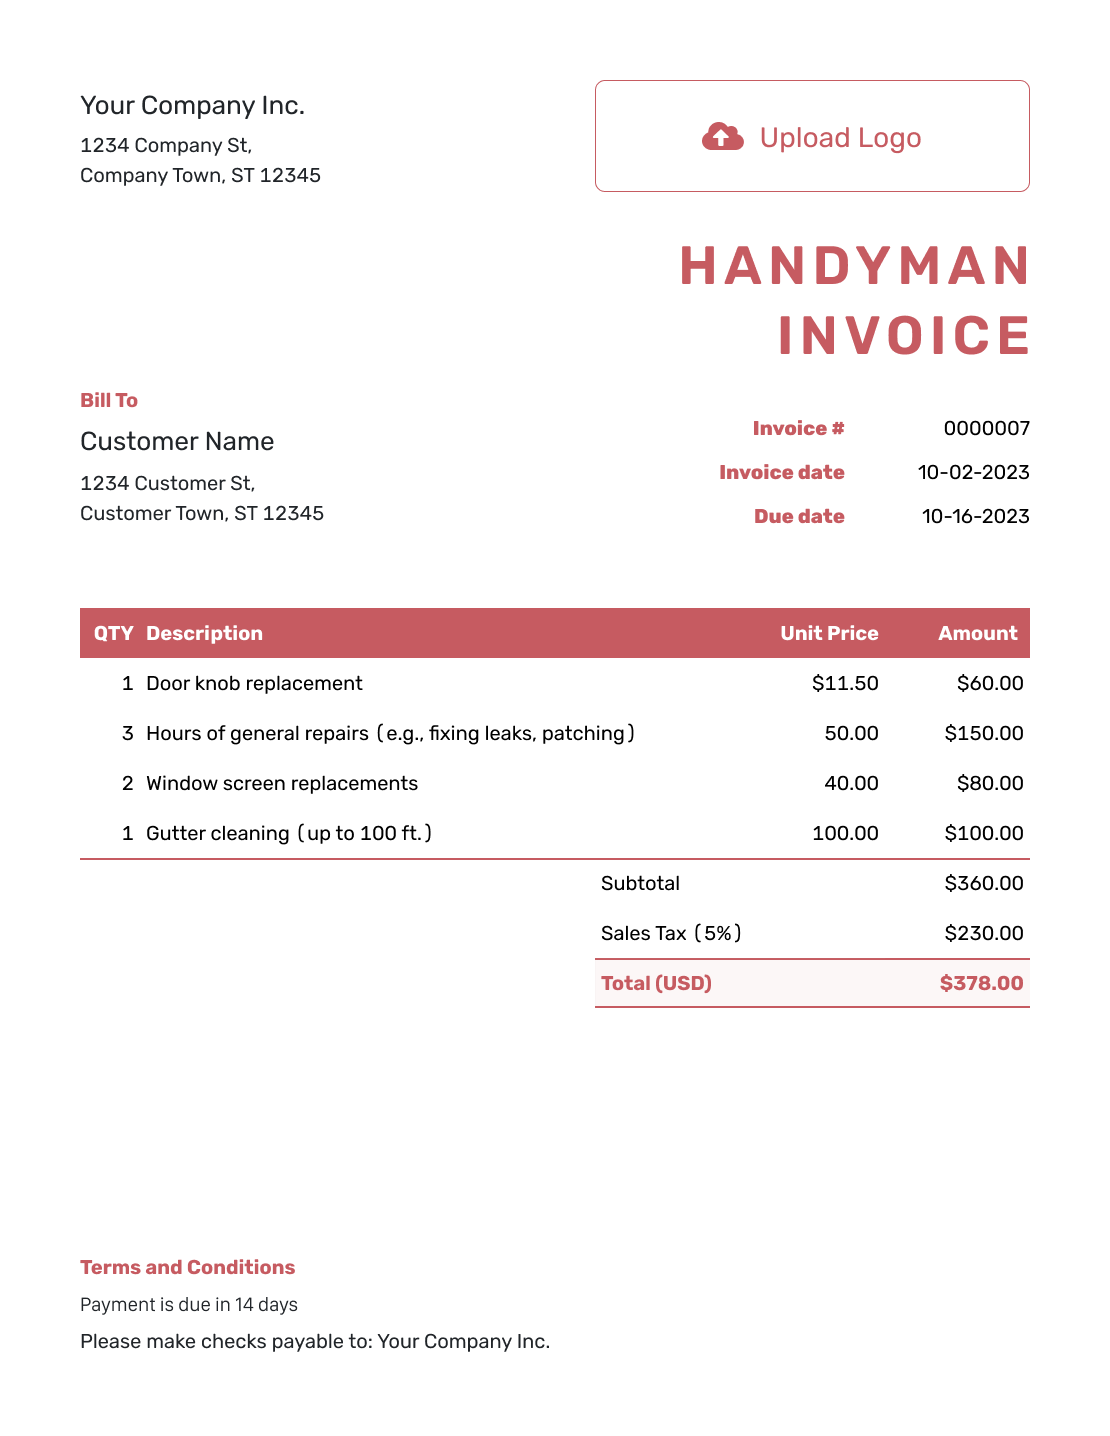 Itemized Handyman Invoice Template